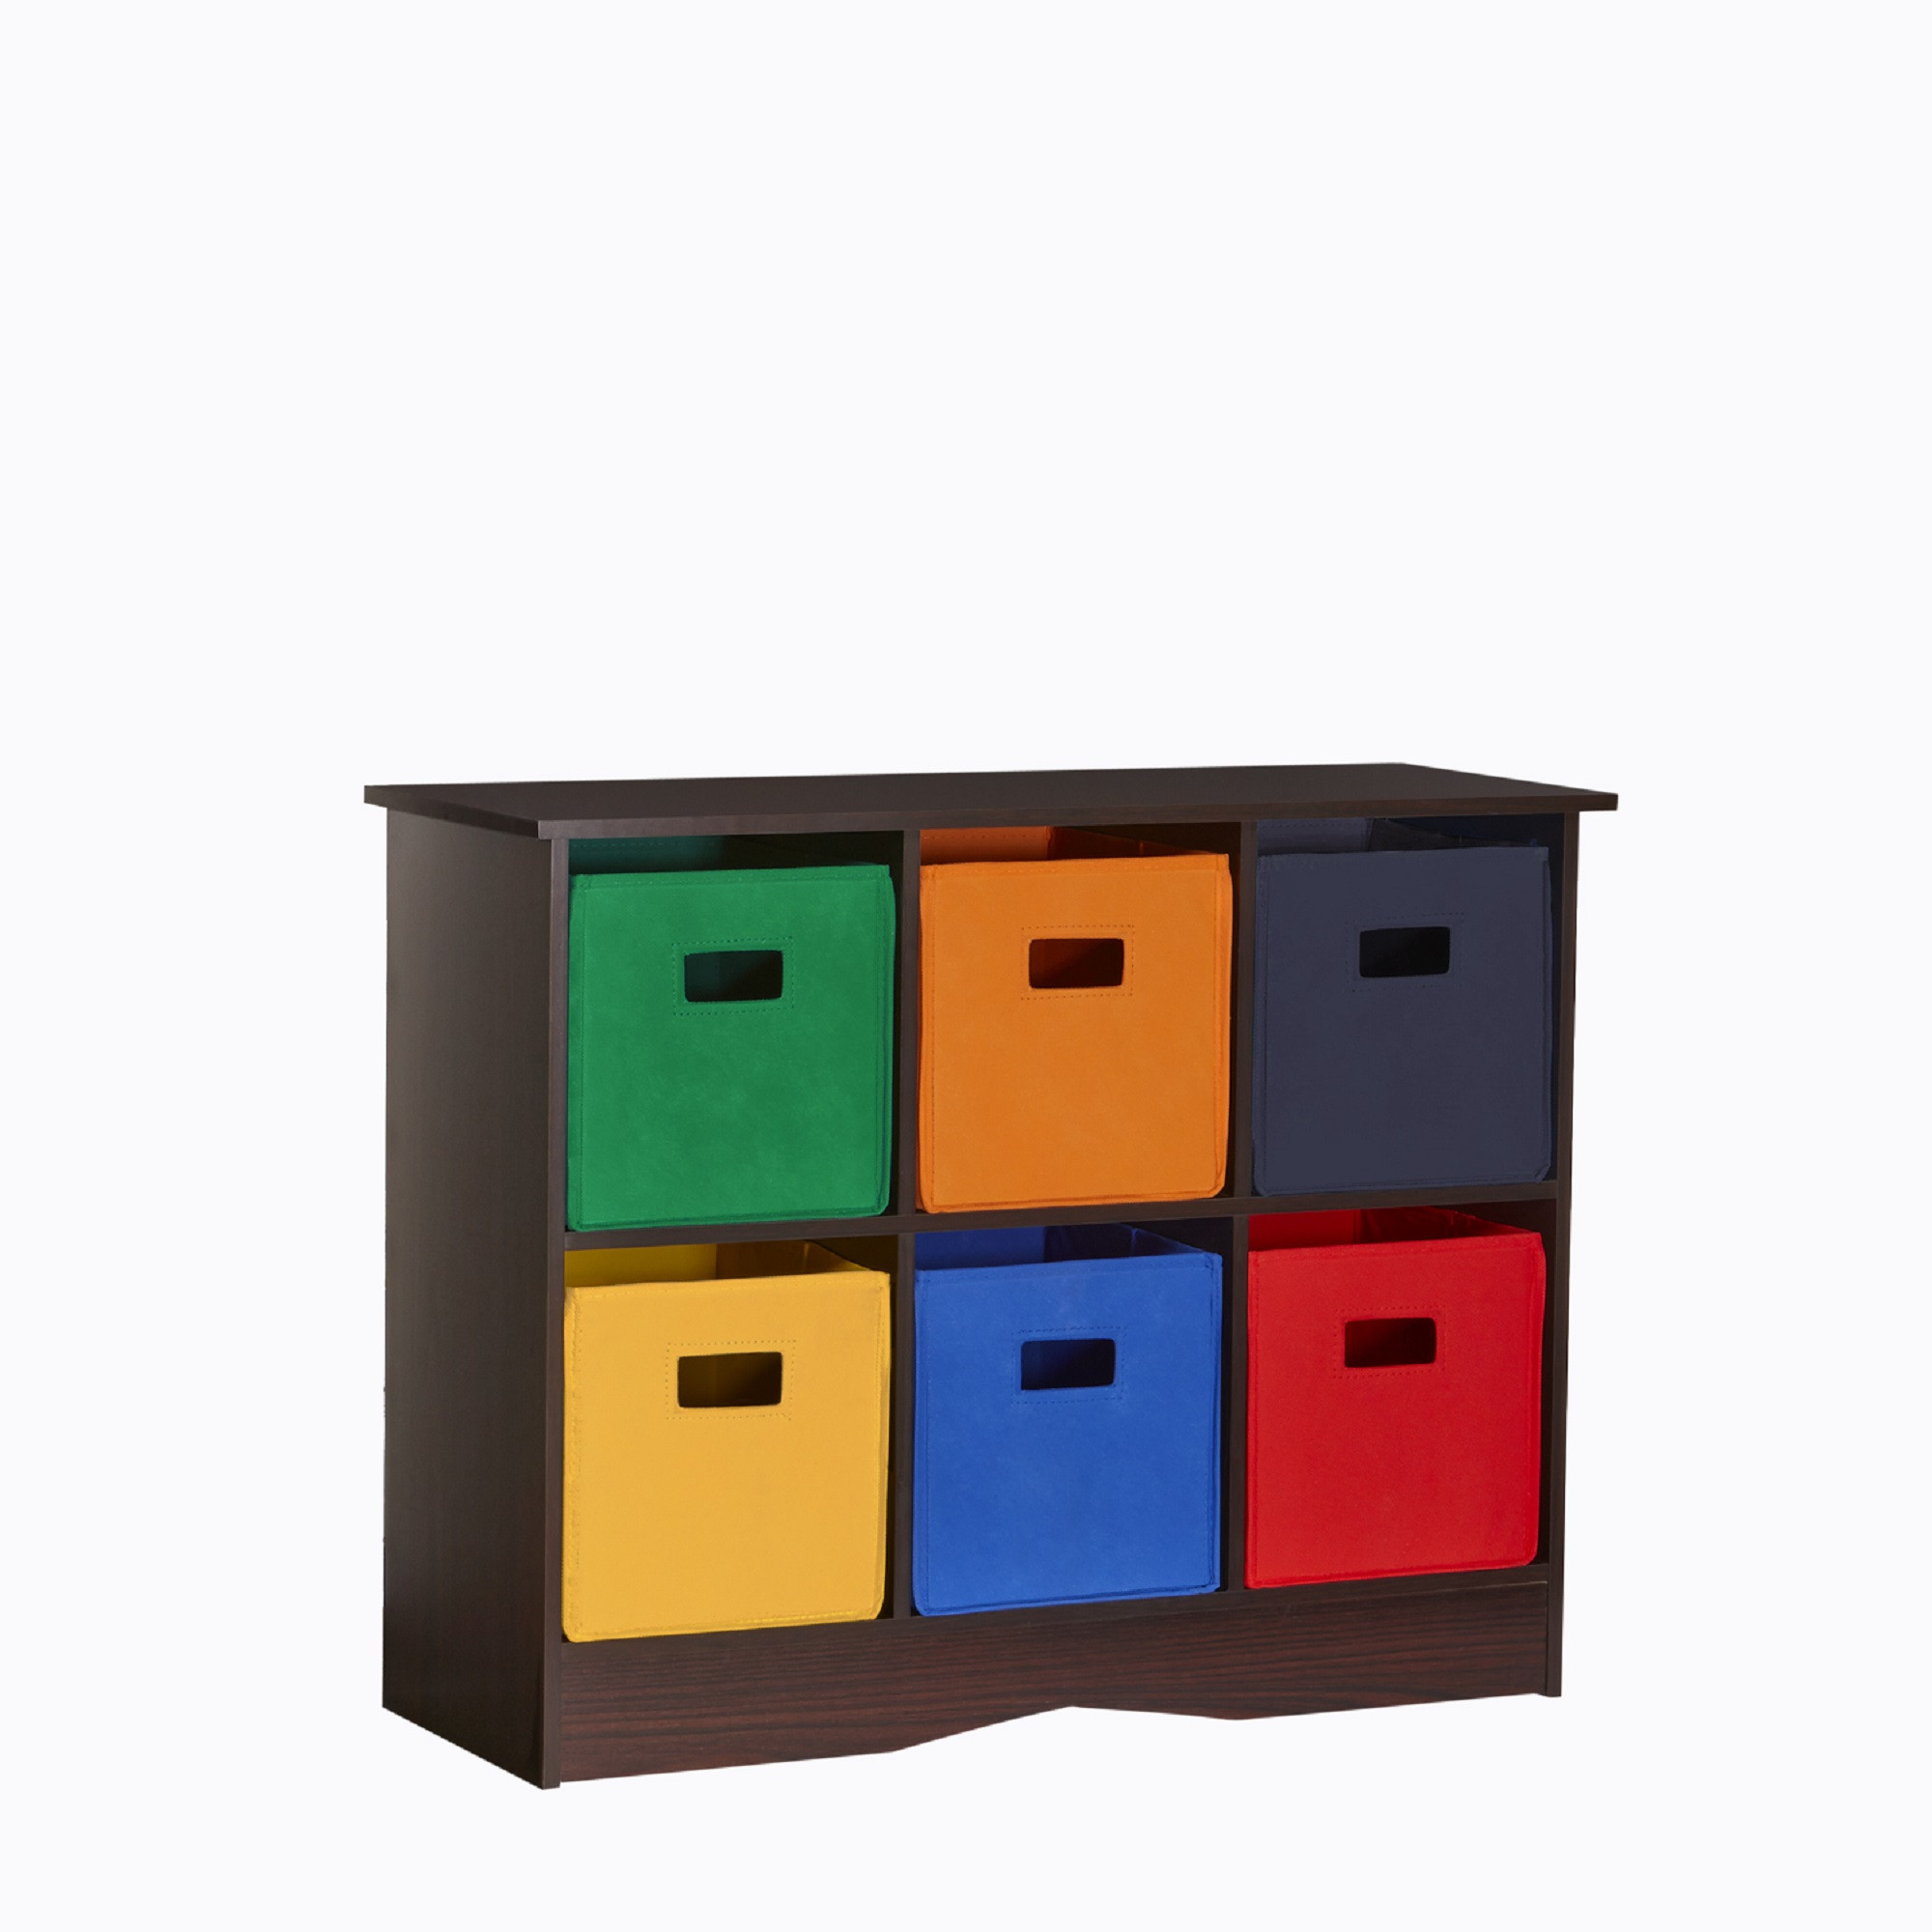 Storage Bin For Kids
 RiverRidge Kids 6 Bin Storage Cabinet Espresso Primary